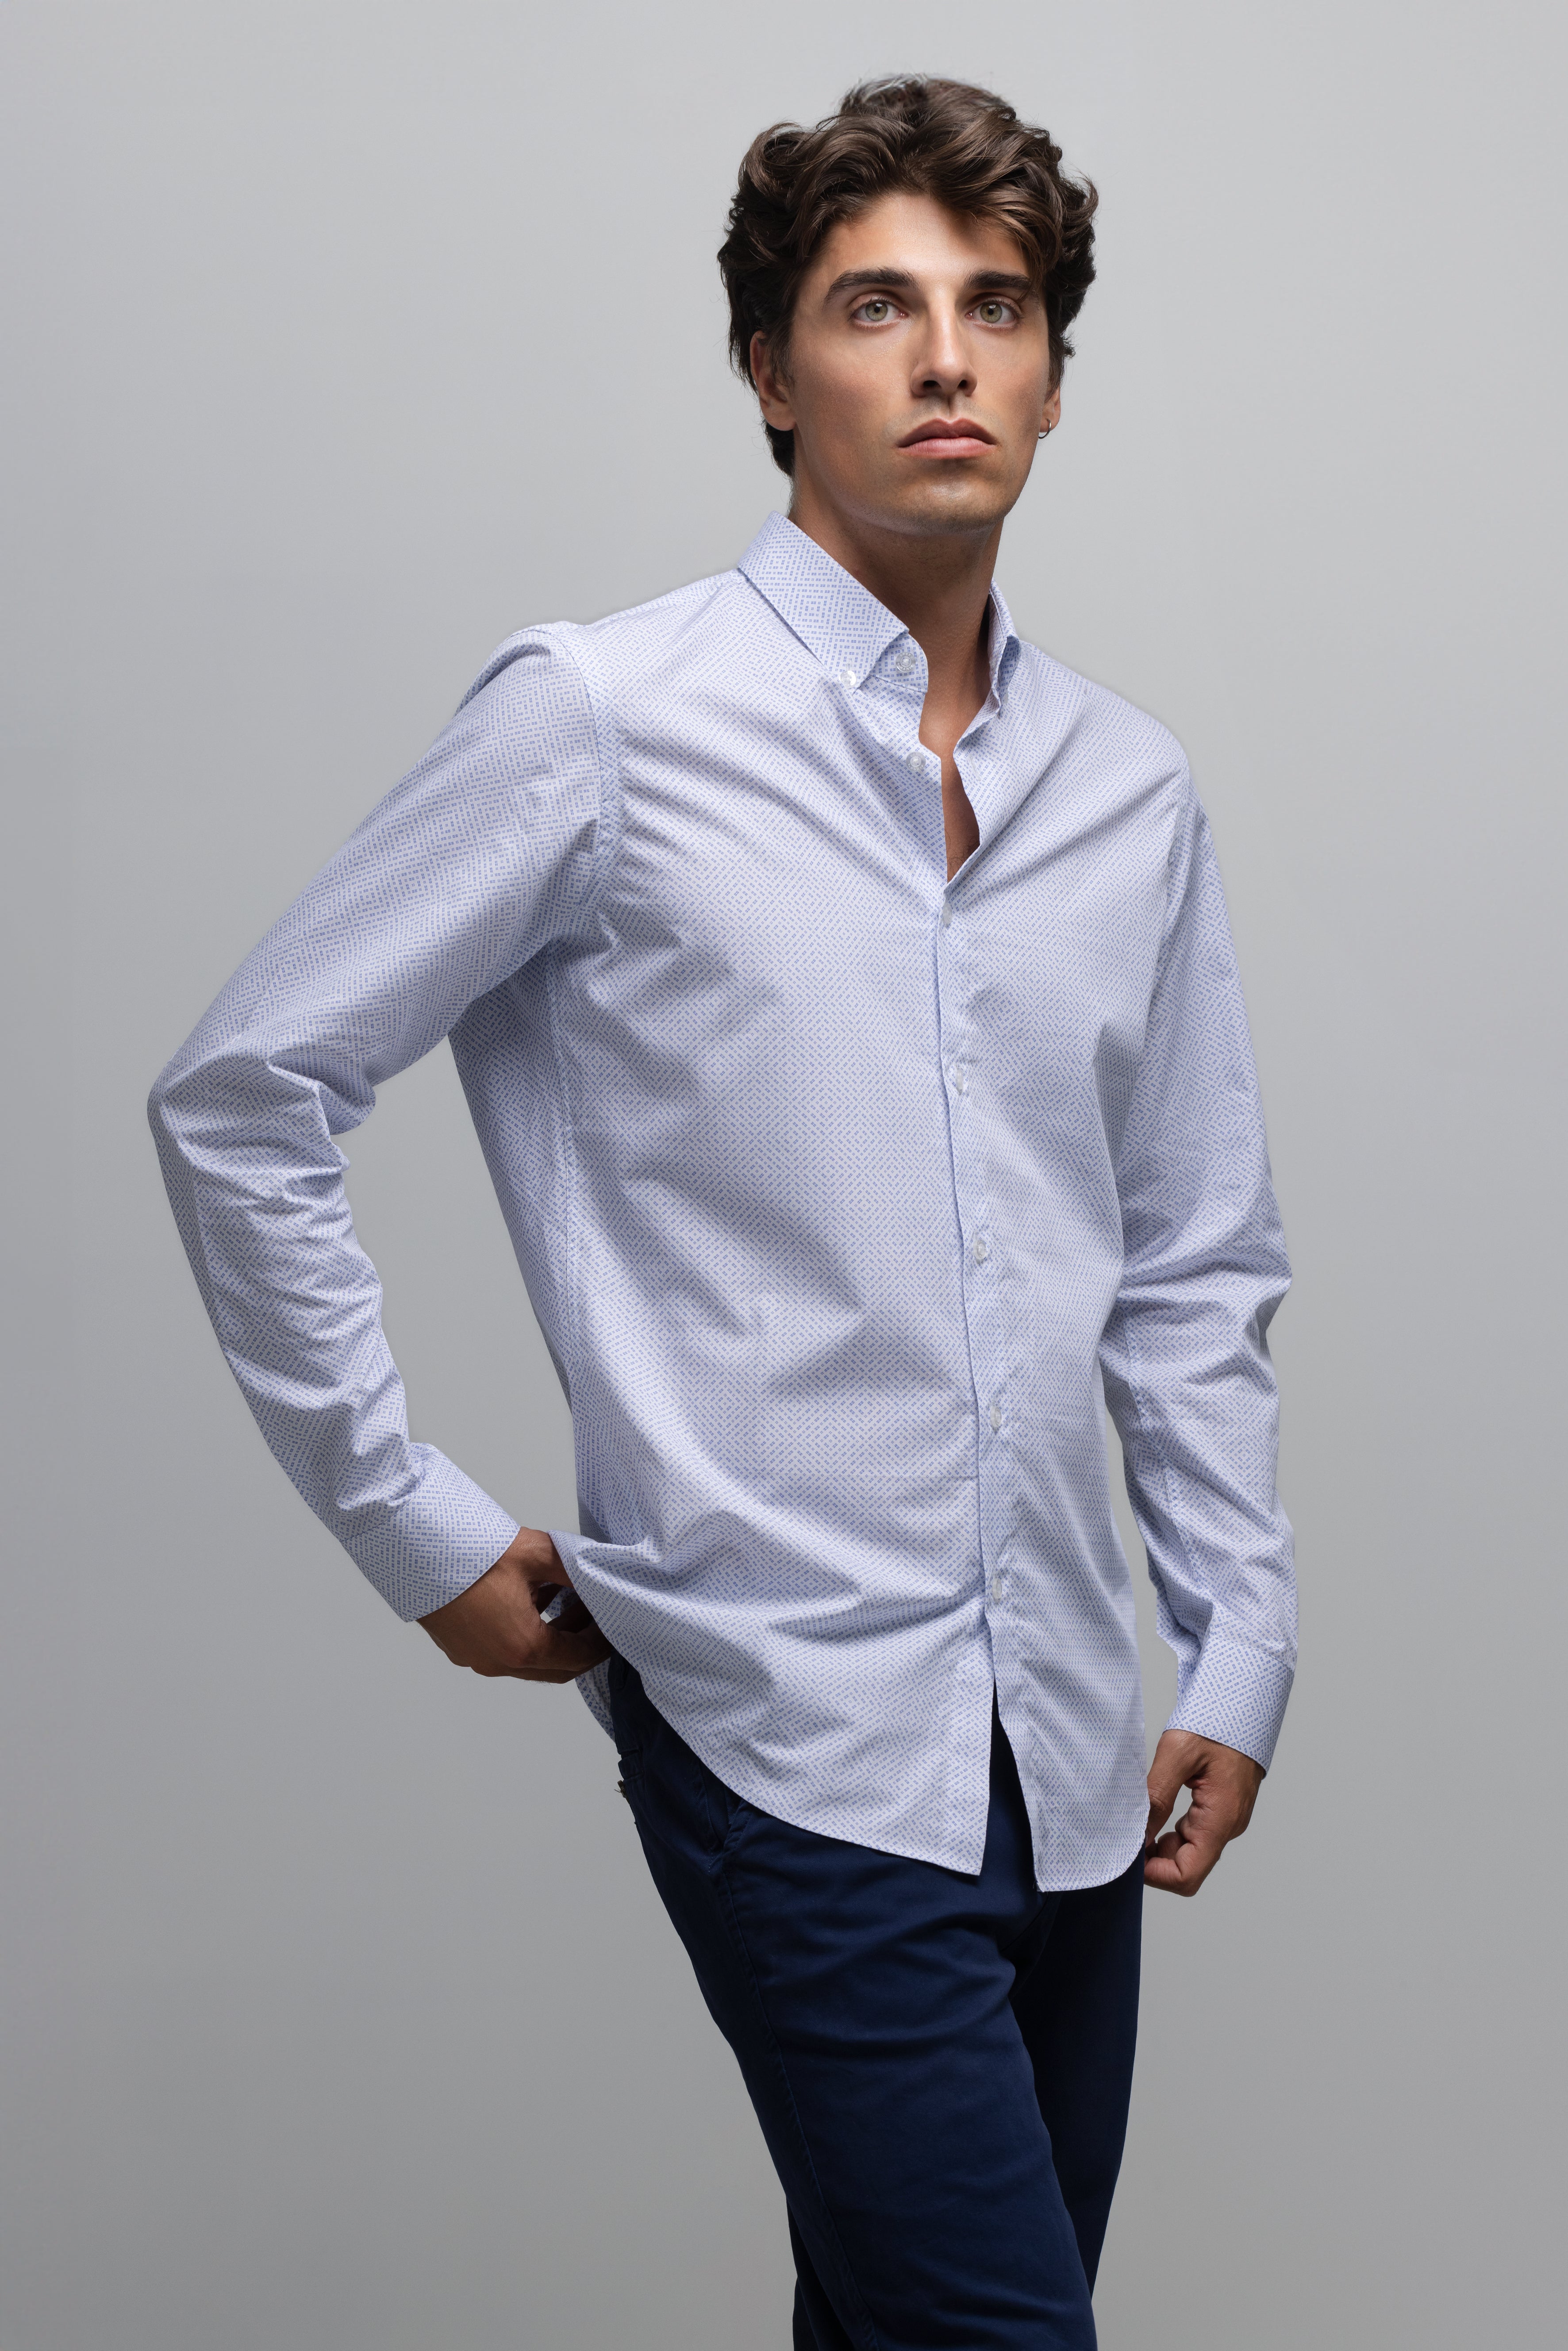 Micromotifs Cotton Slim Shirt